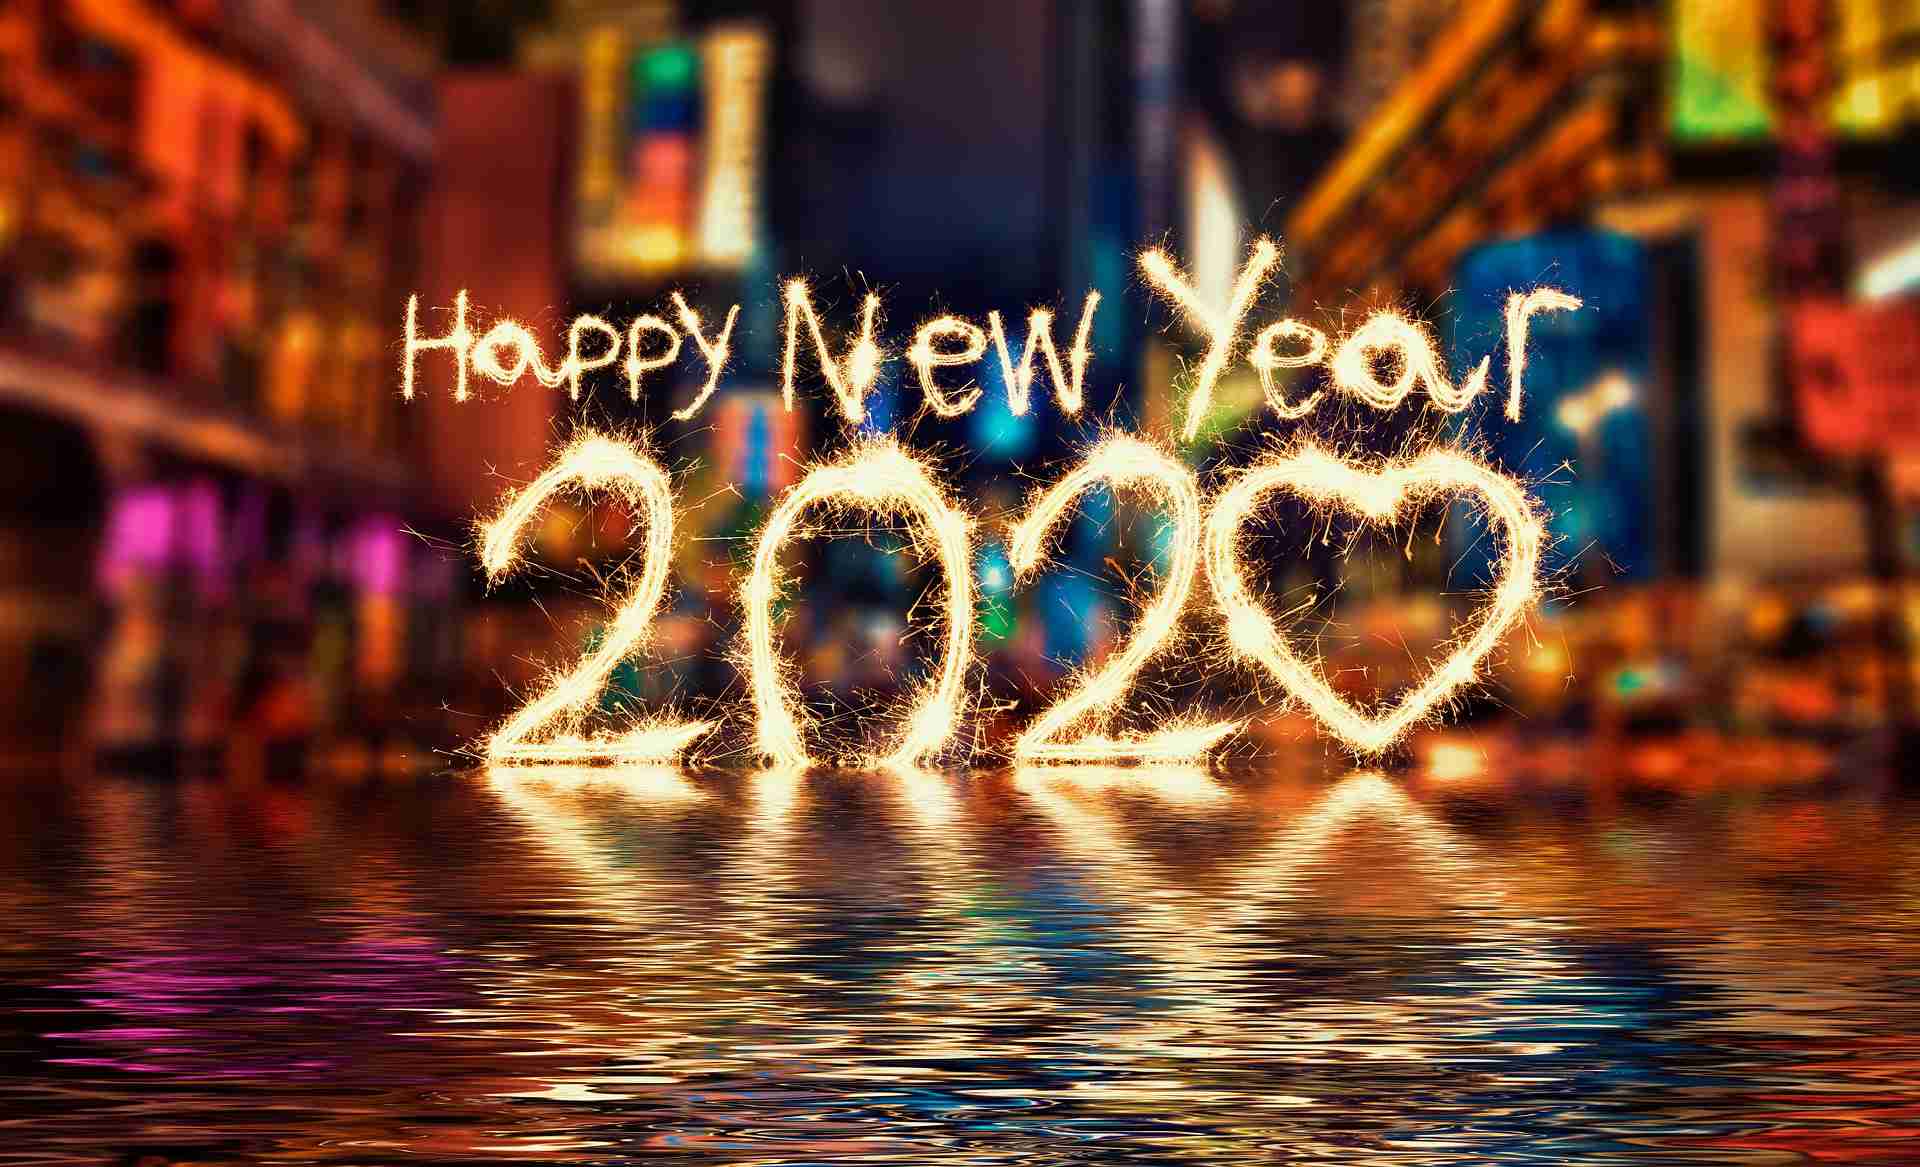 Best Happy New Year HD Wallpaper Image